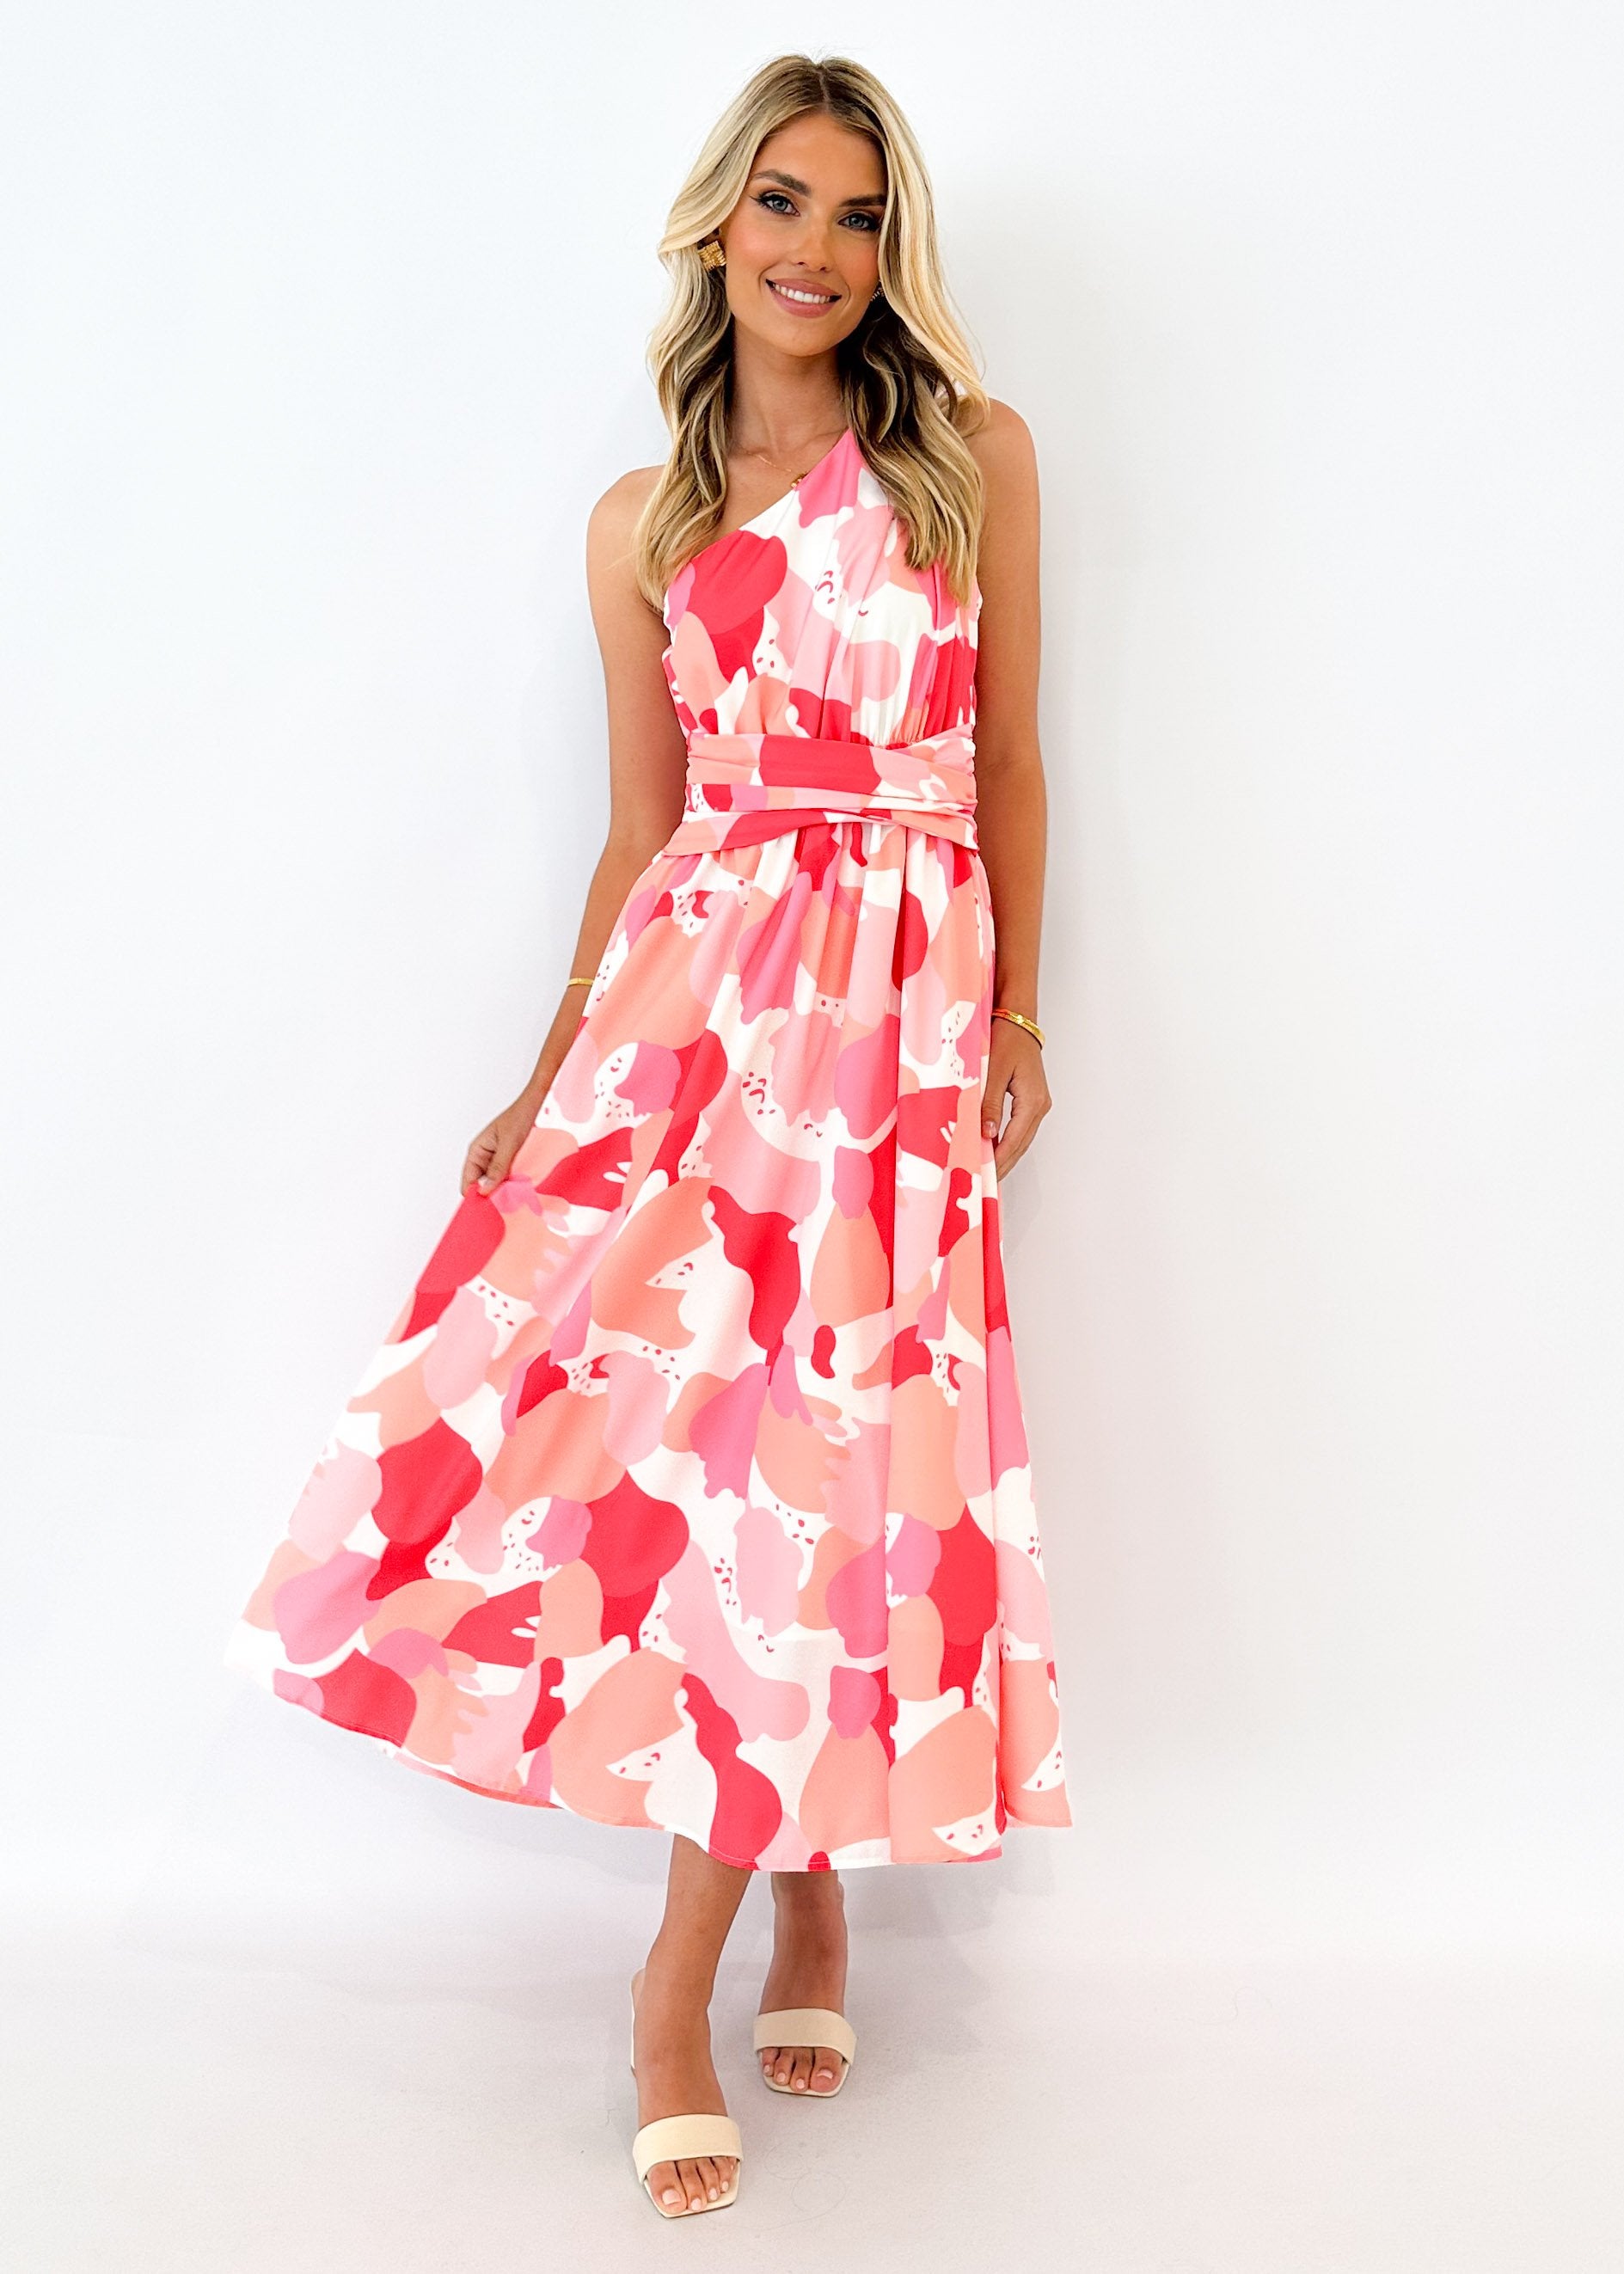 Oara One Shoulder Maxi Dress - Pink Floral